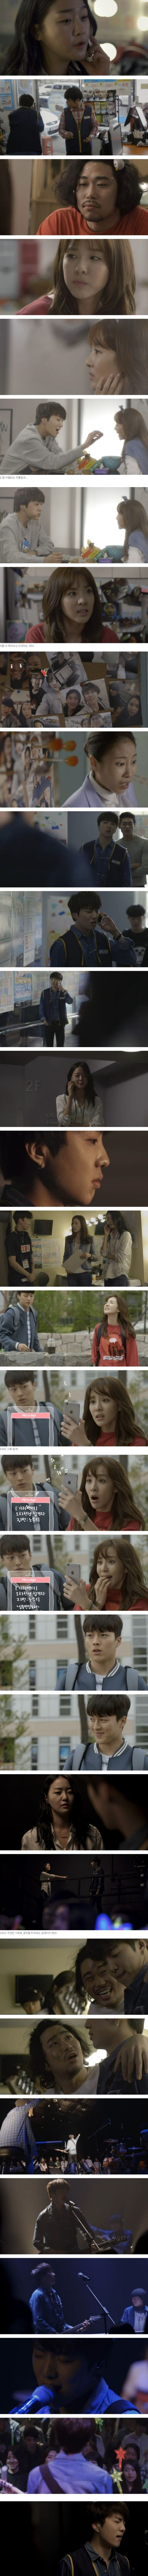 episode 3 captures for the Korean drama 'We Broke Up'